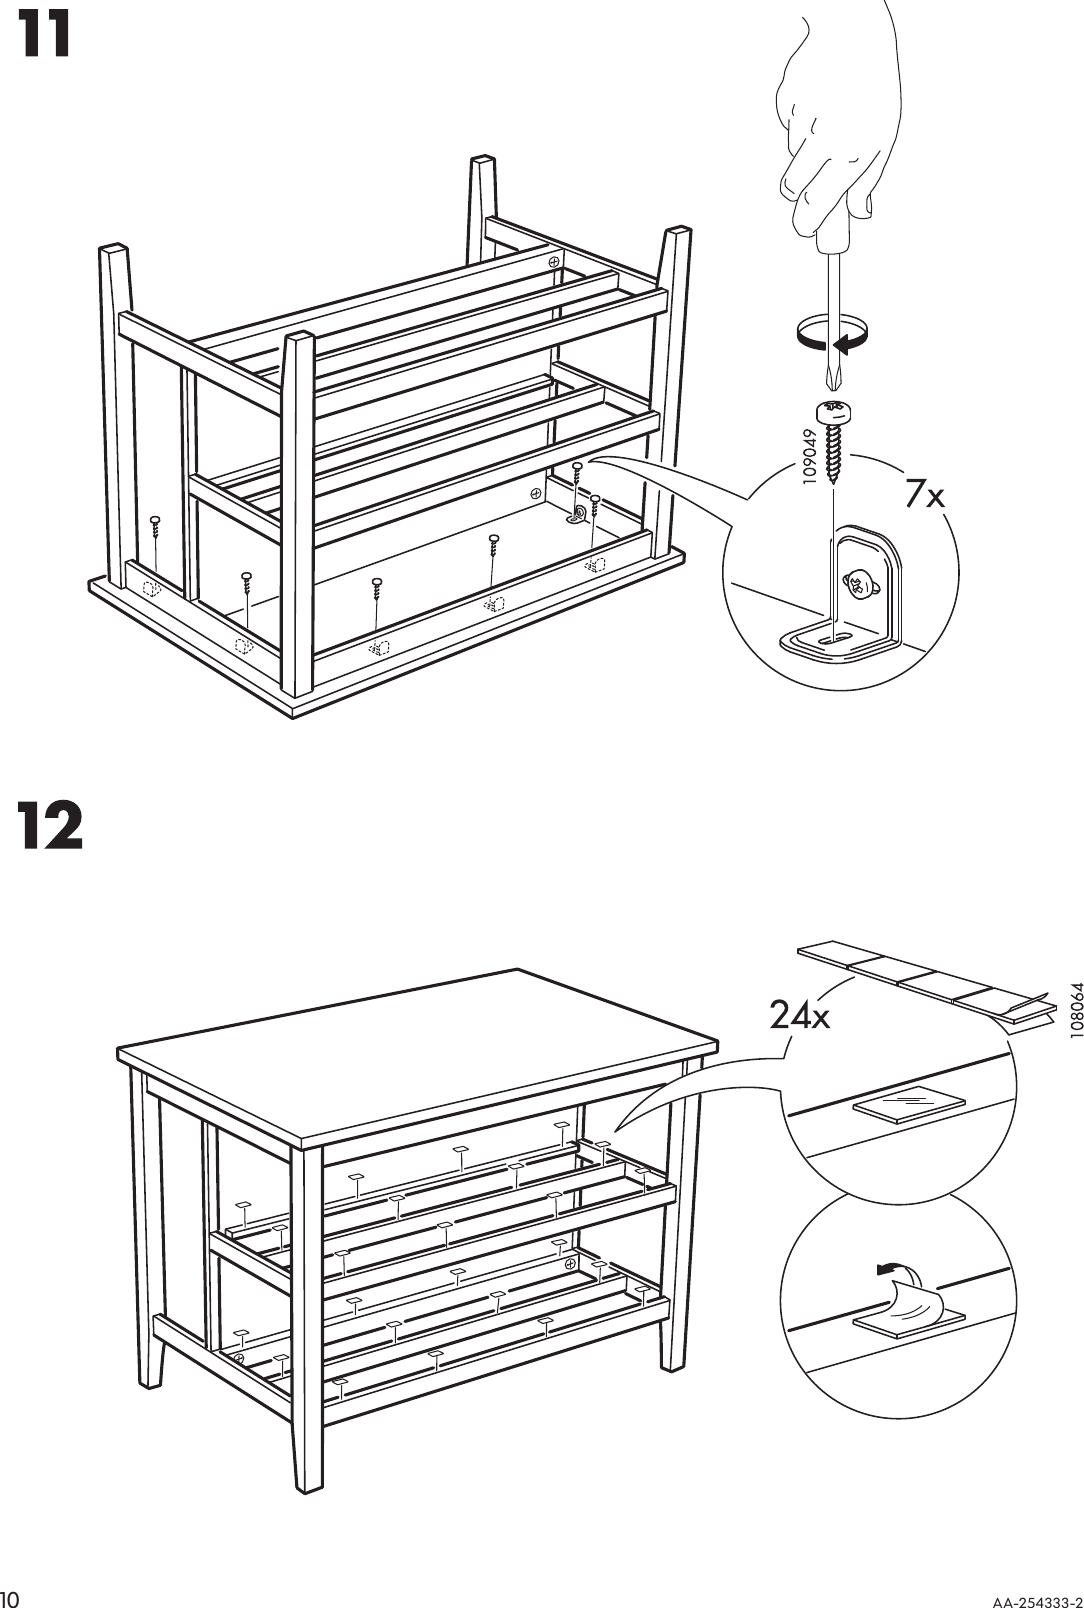 IkeaStenstorpKitchenIsland50X31AssemblyInstruction.1190322856 User Guide Page 10 